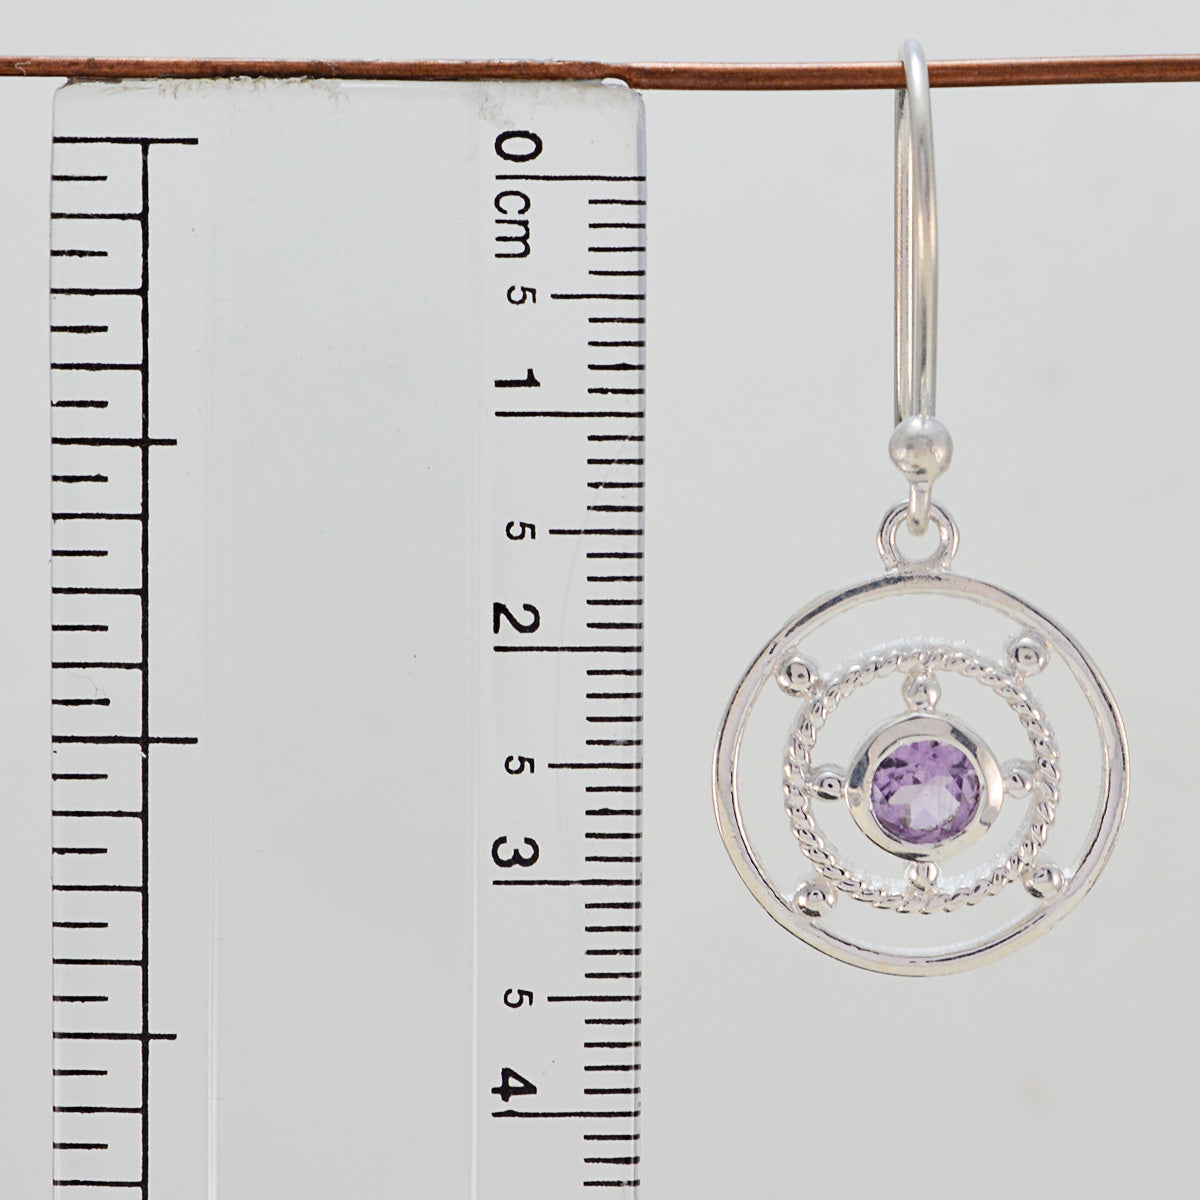 Riyo Nice Gemstone round Faceted Purple Amethyst Silver Earrings gift for brithday